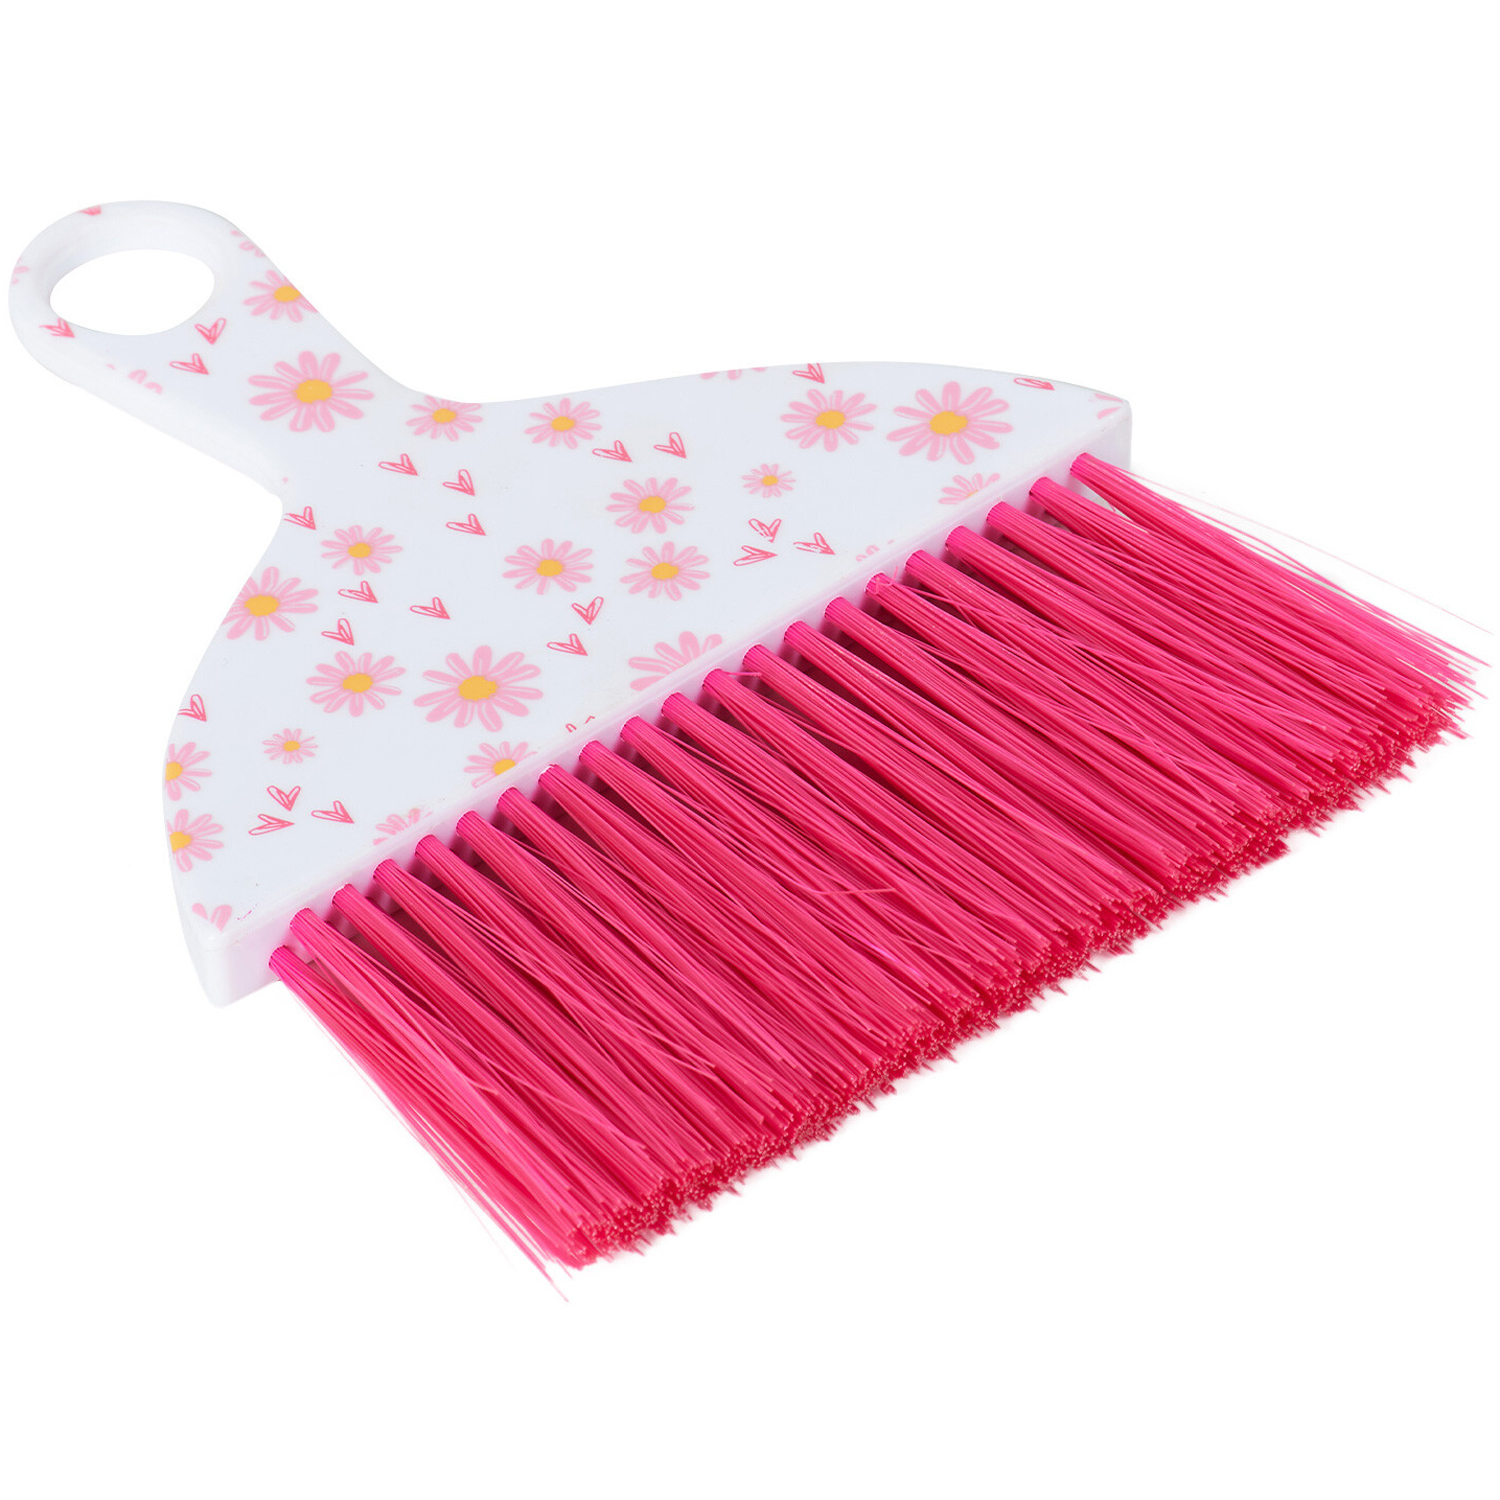 Daisy Pink Mini Brush and Dustpan Image 4